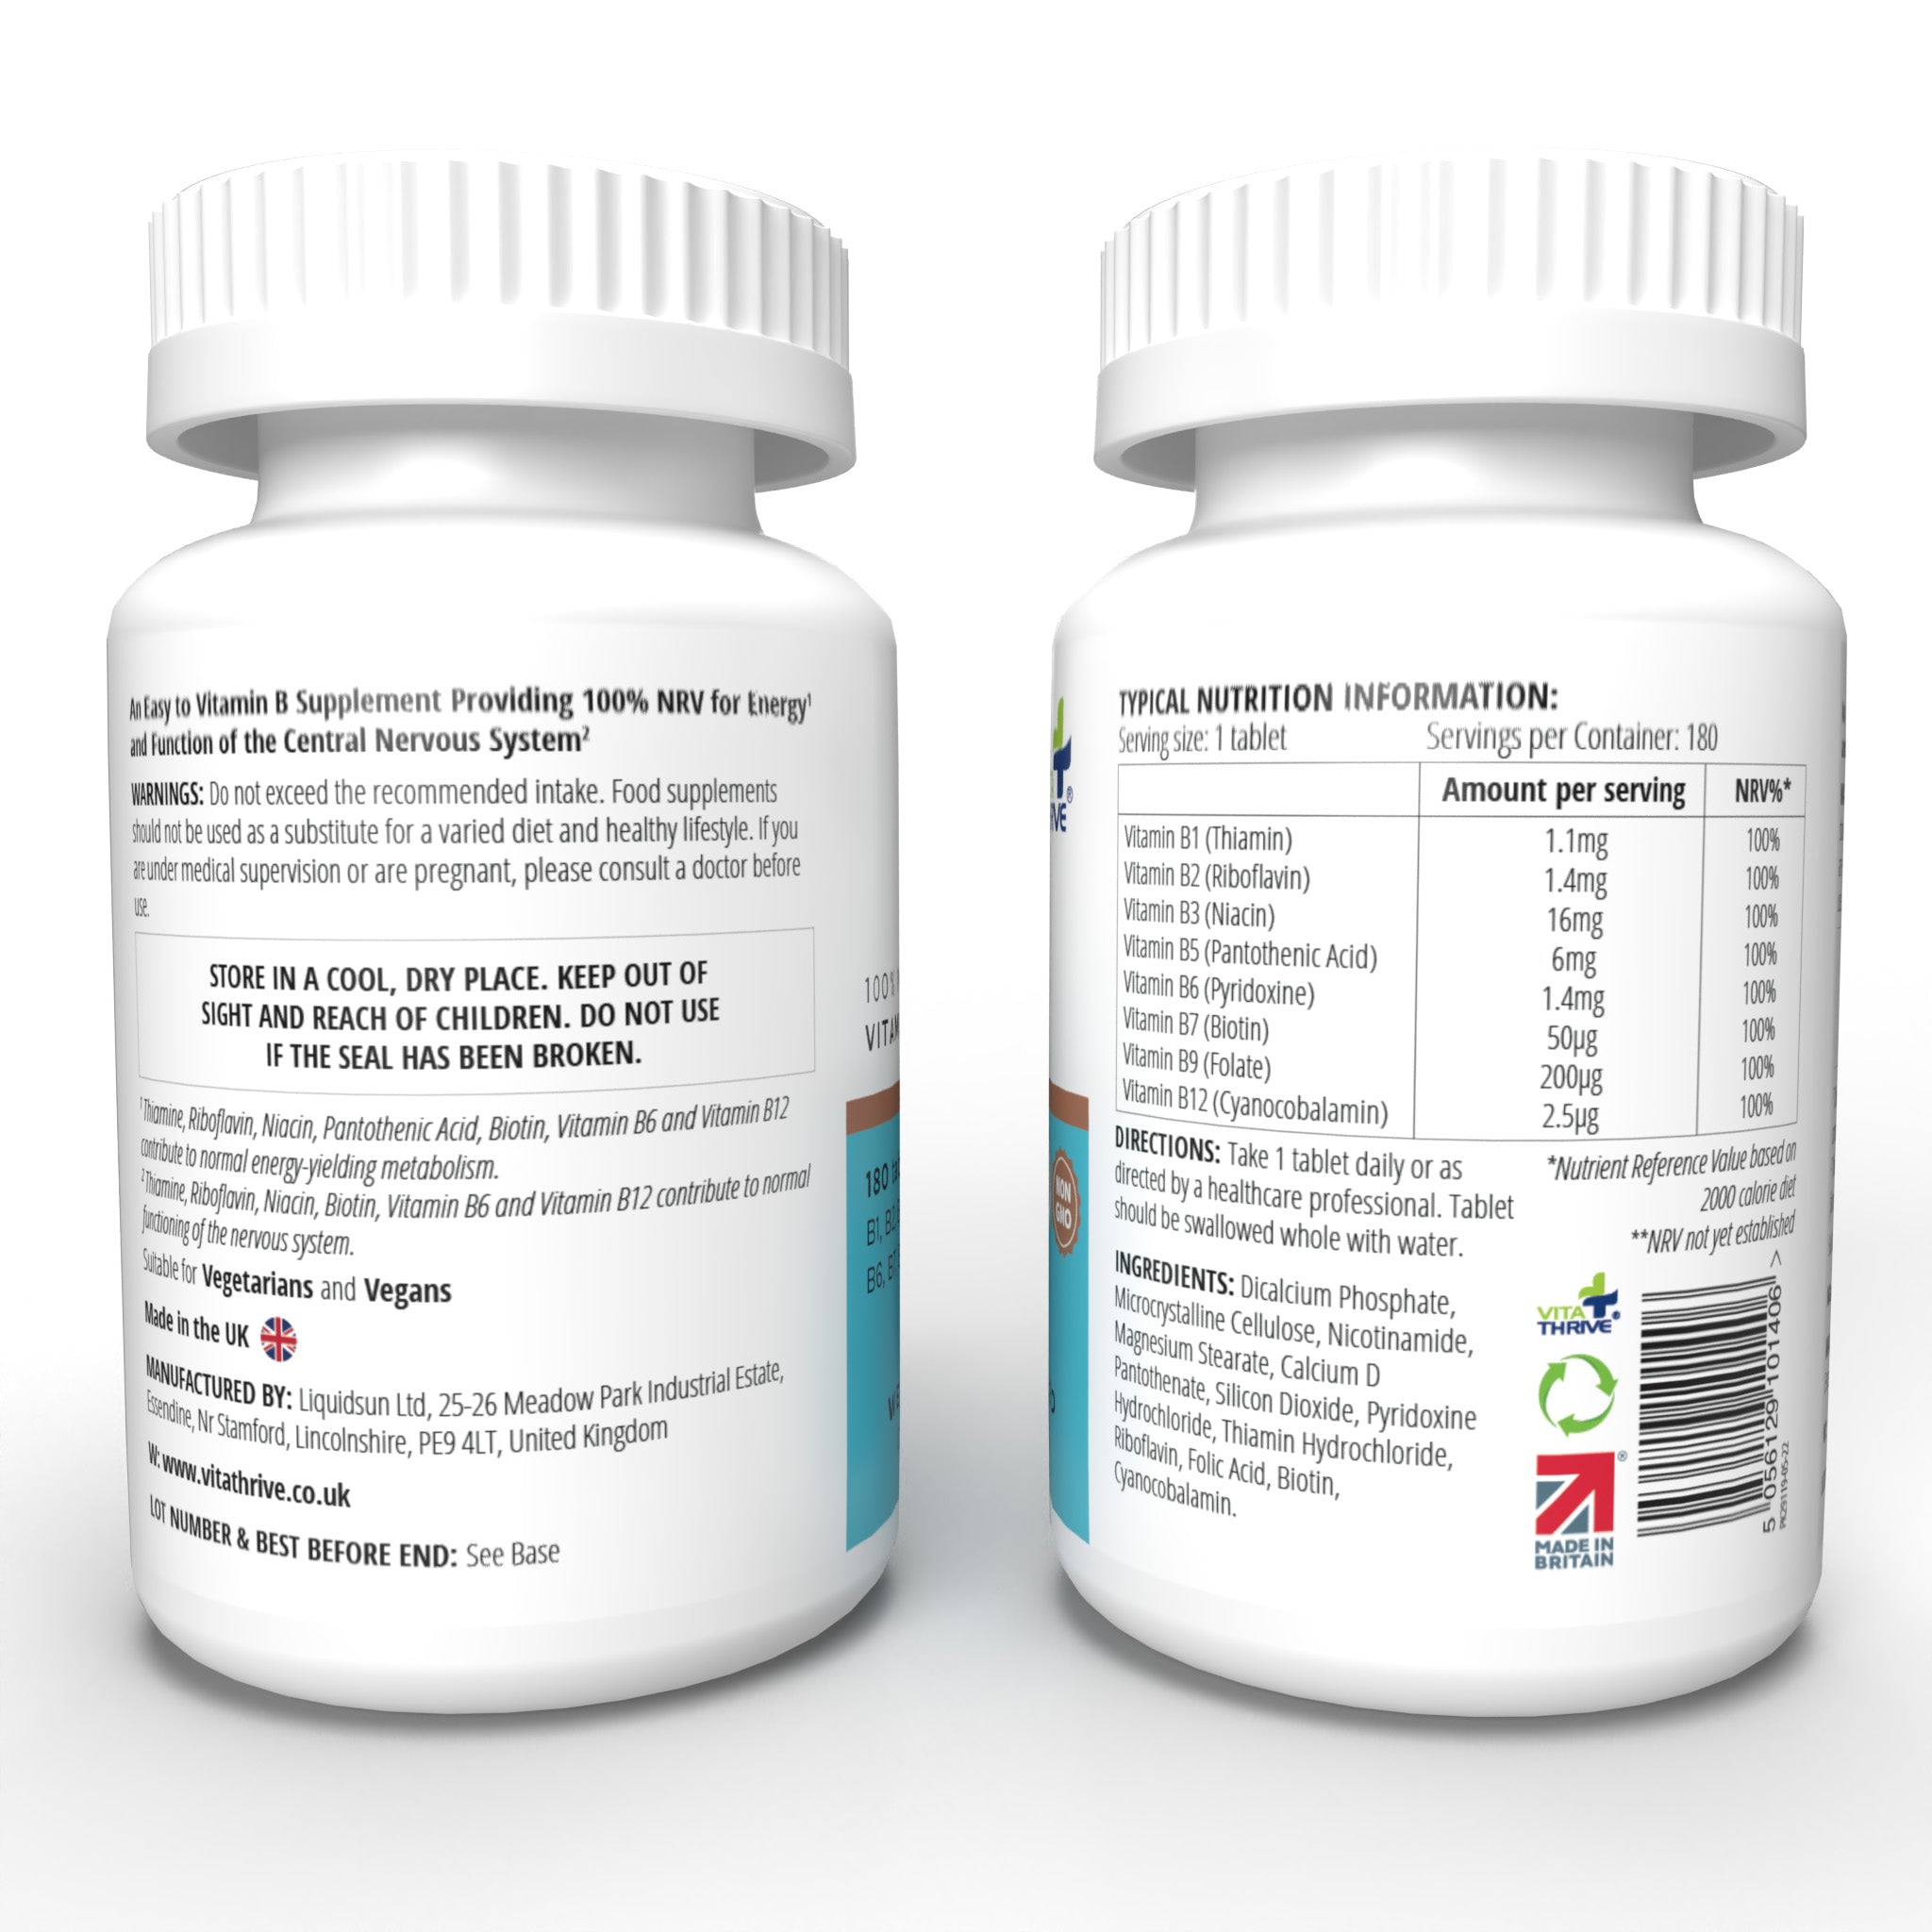 VitaThrive® Vitamin B Complex (100% NRV) Tablets